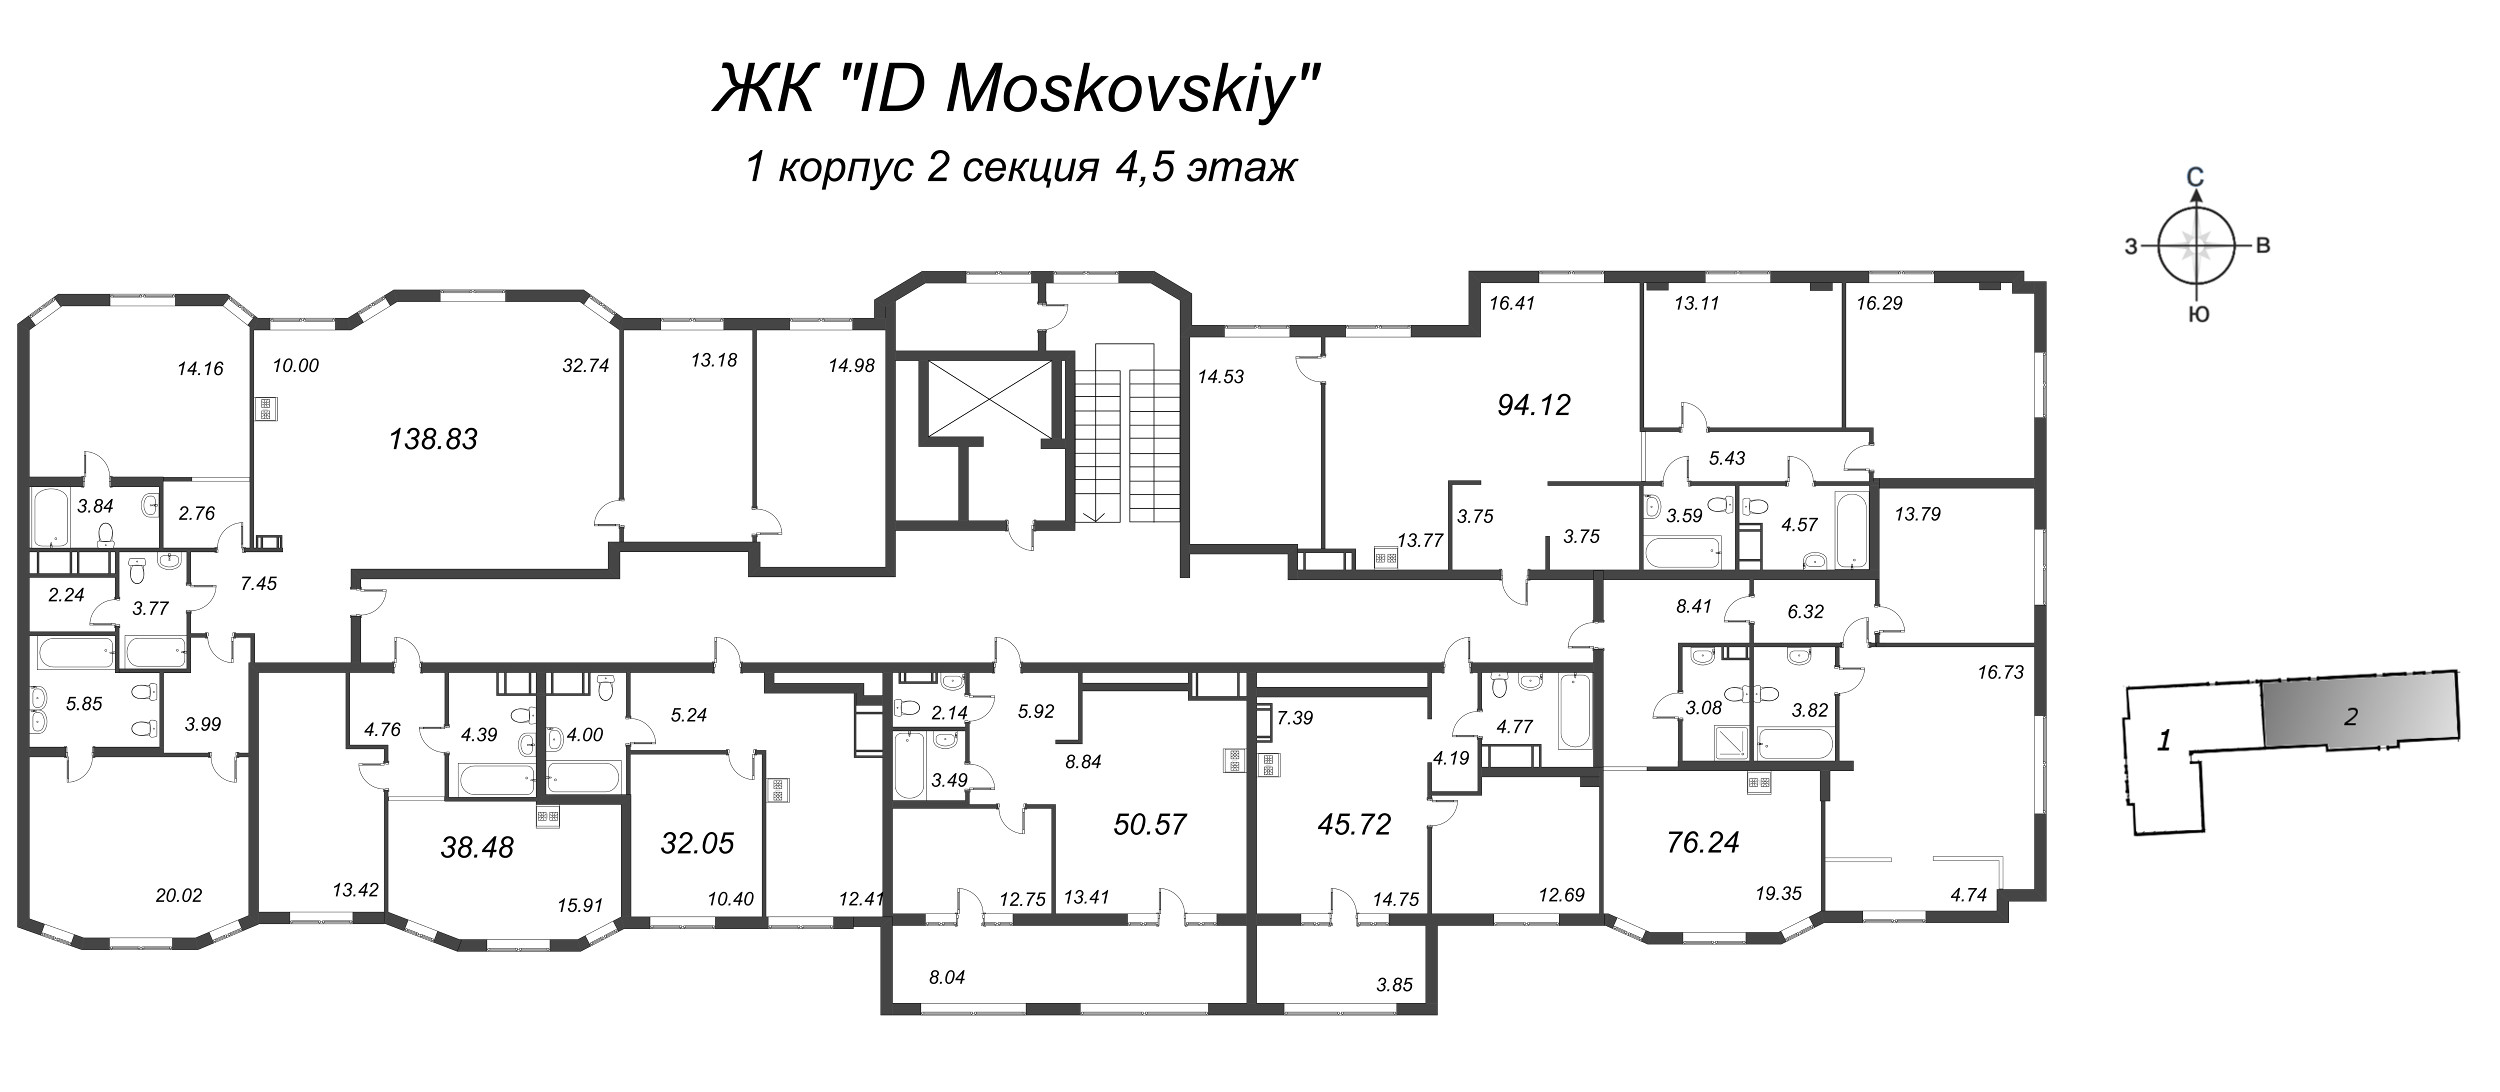 4-комнатная (Евро) квартира, 94.12 м² - планировка этажа